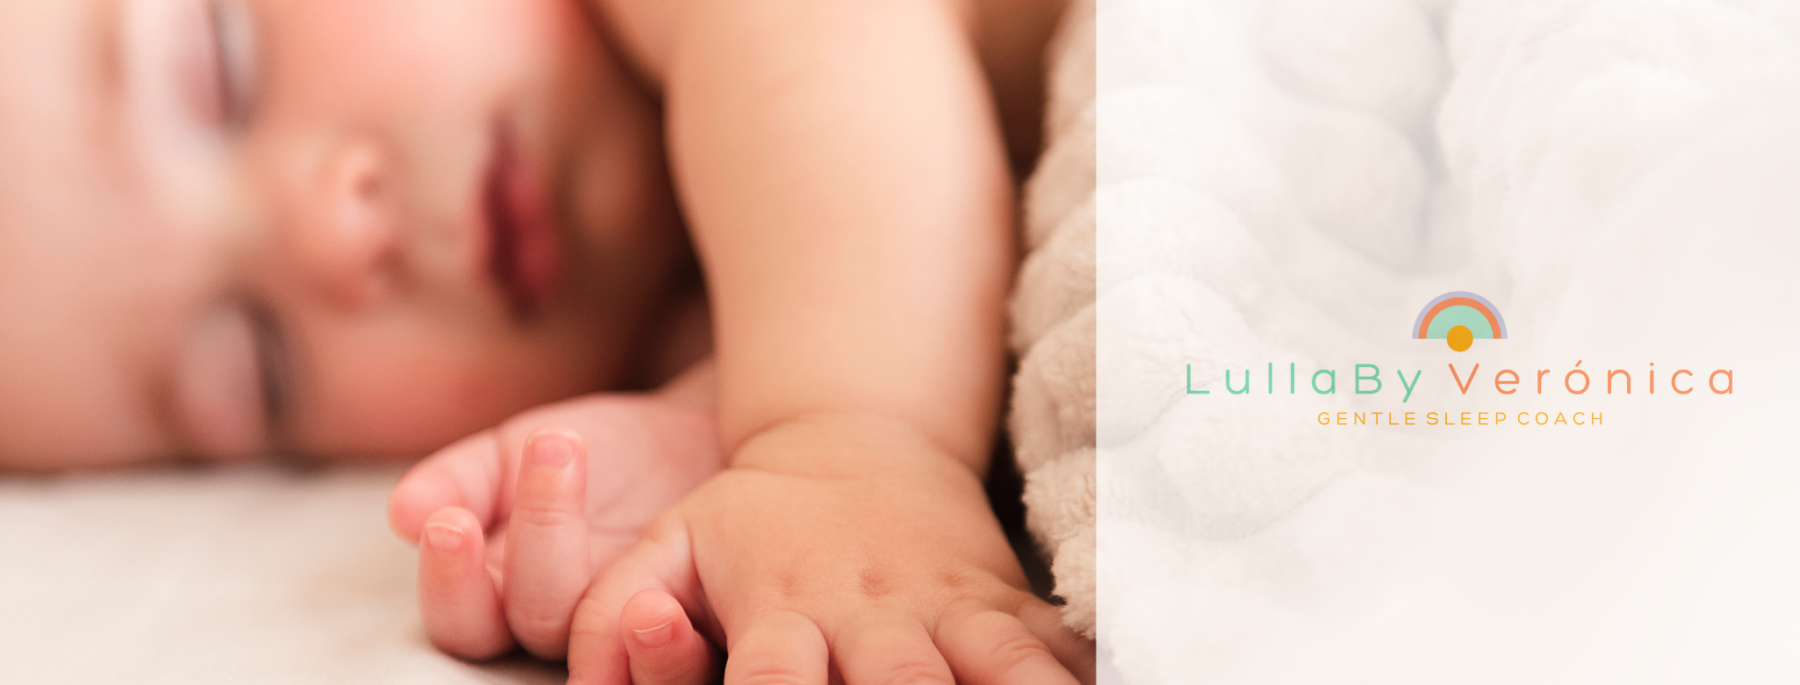 Get Better Sleep: Meet Lullaby Veronica on Nashville Baby Guide